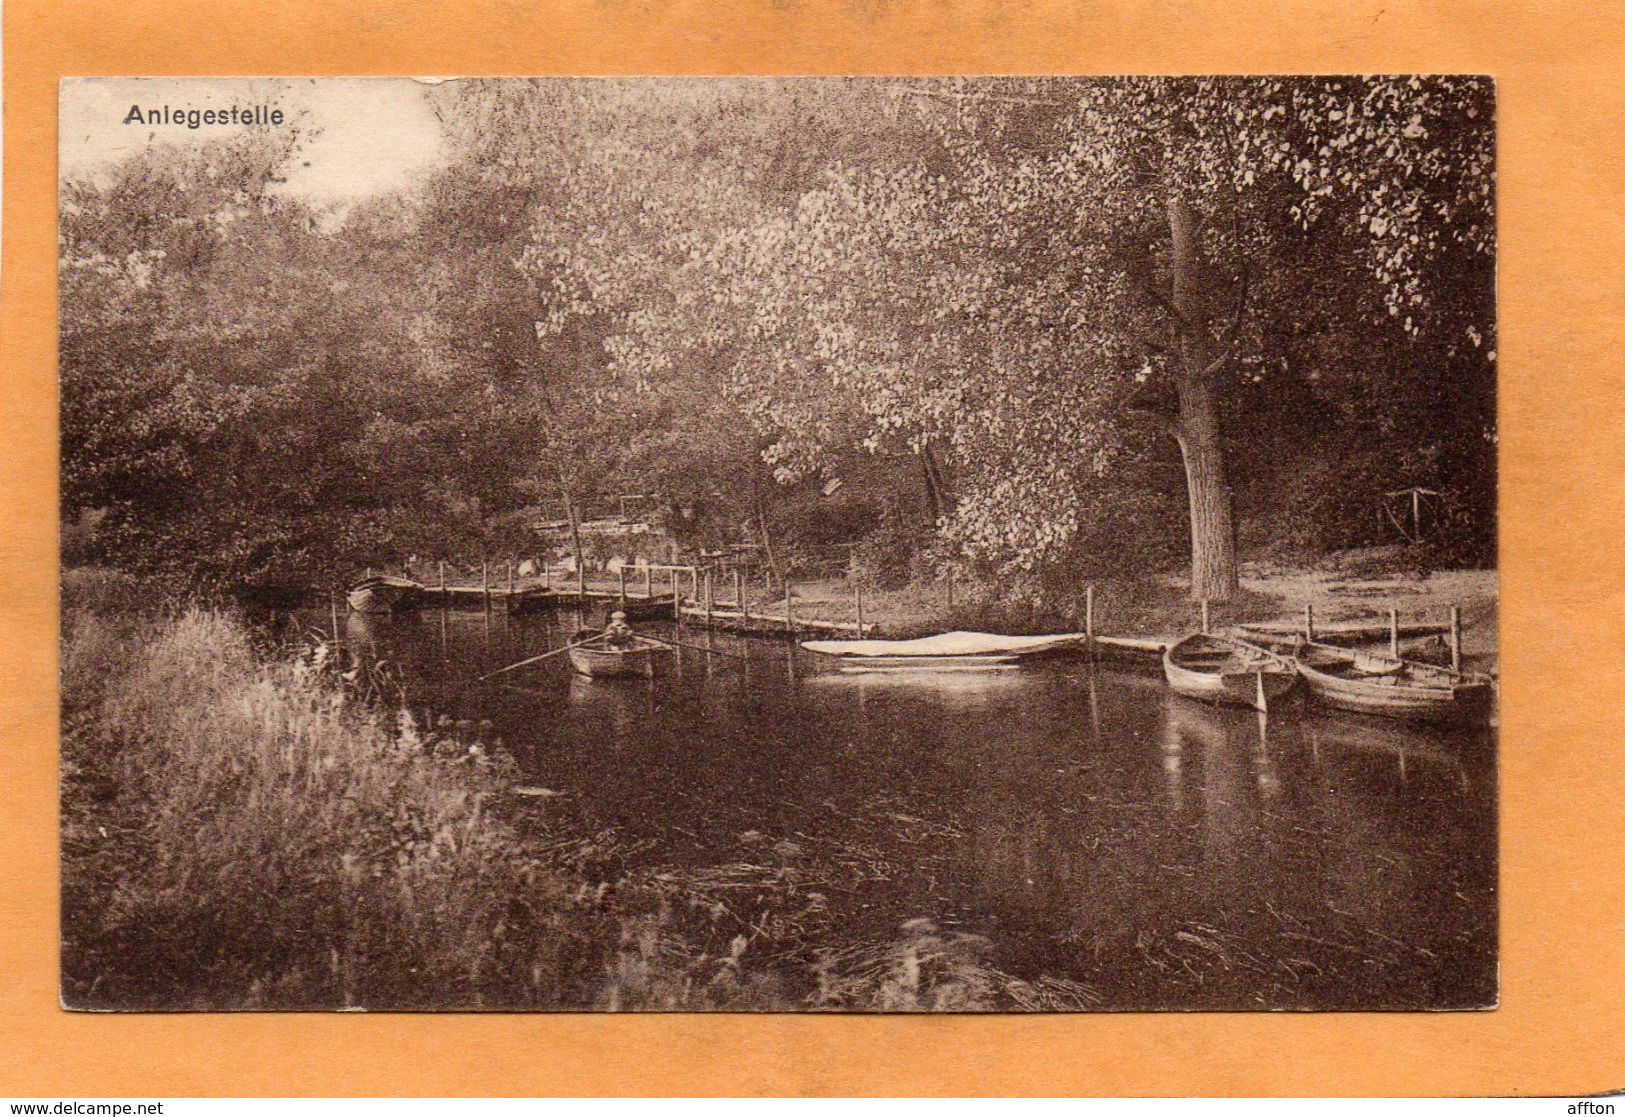 Jagersbronnen Reinbek Germany 1910  Postcard - Reinbek